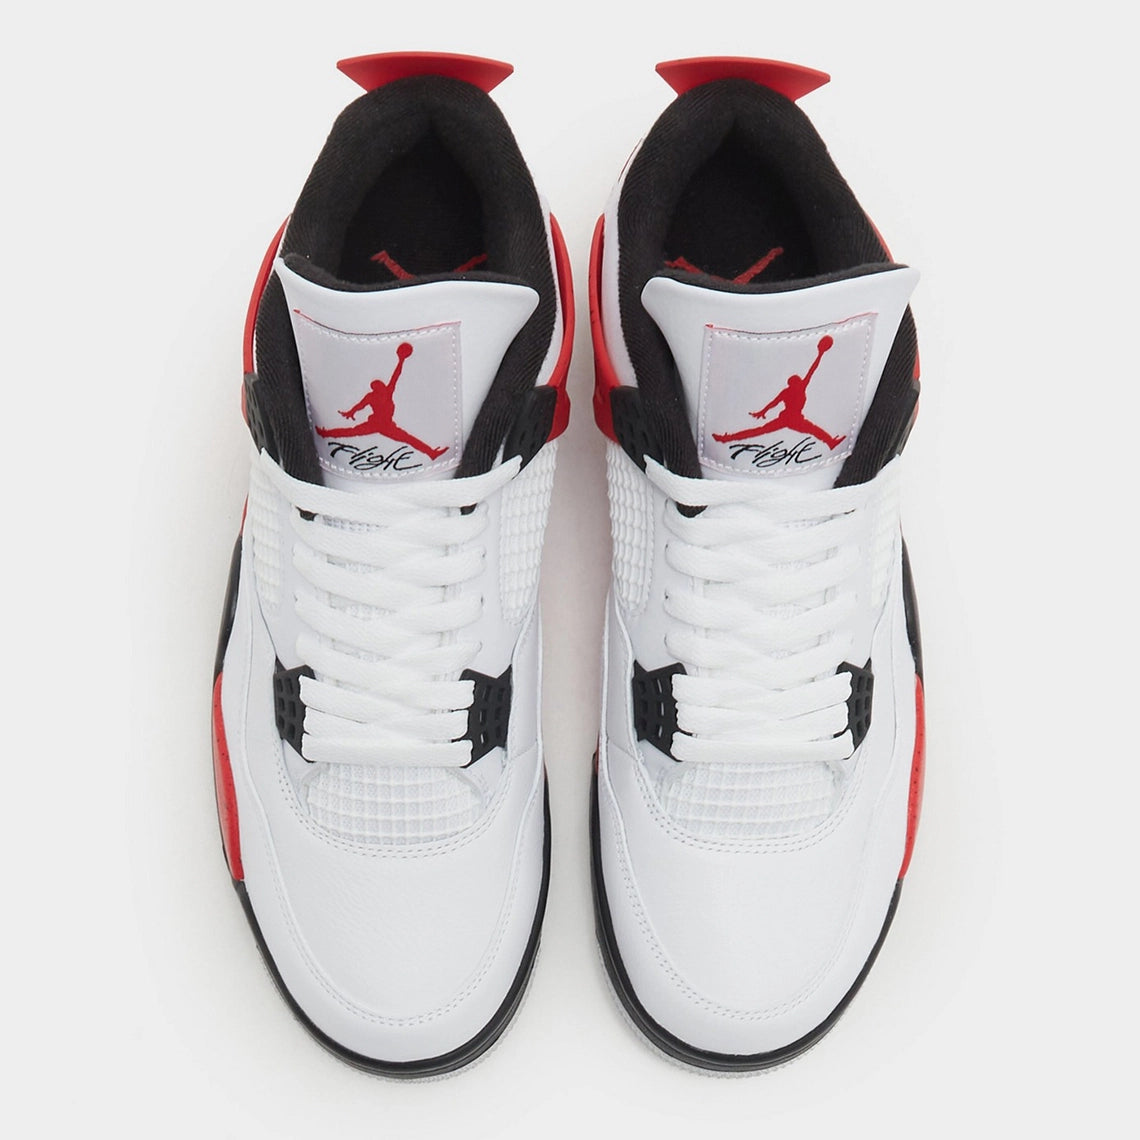 Air Jordan 4 Retro 'Red Cement'